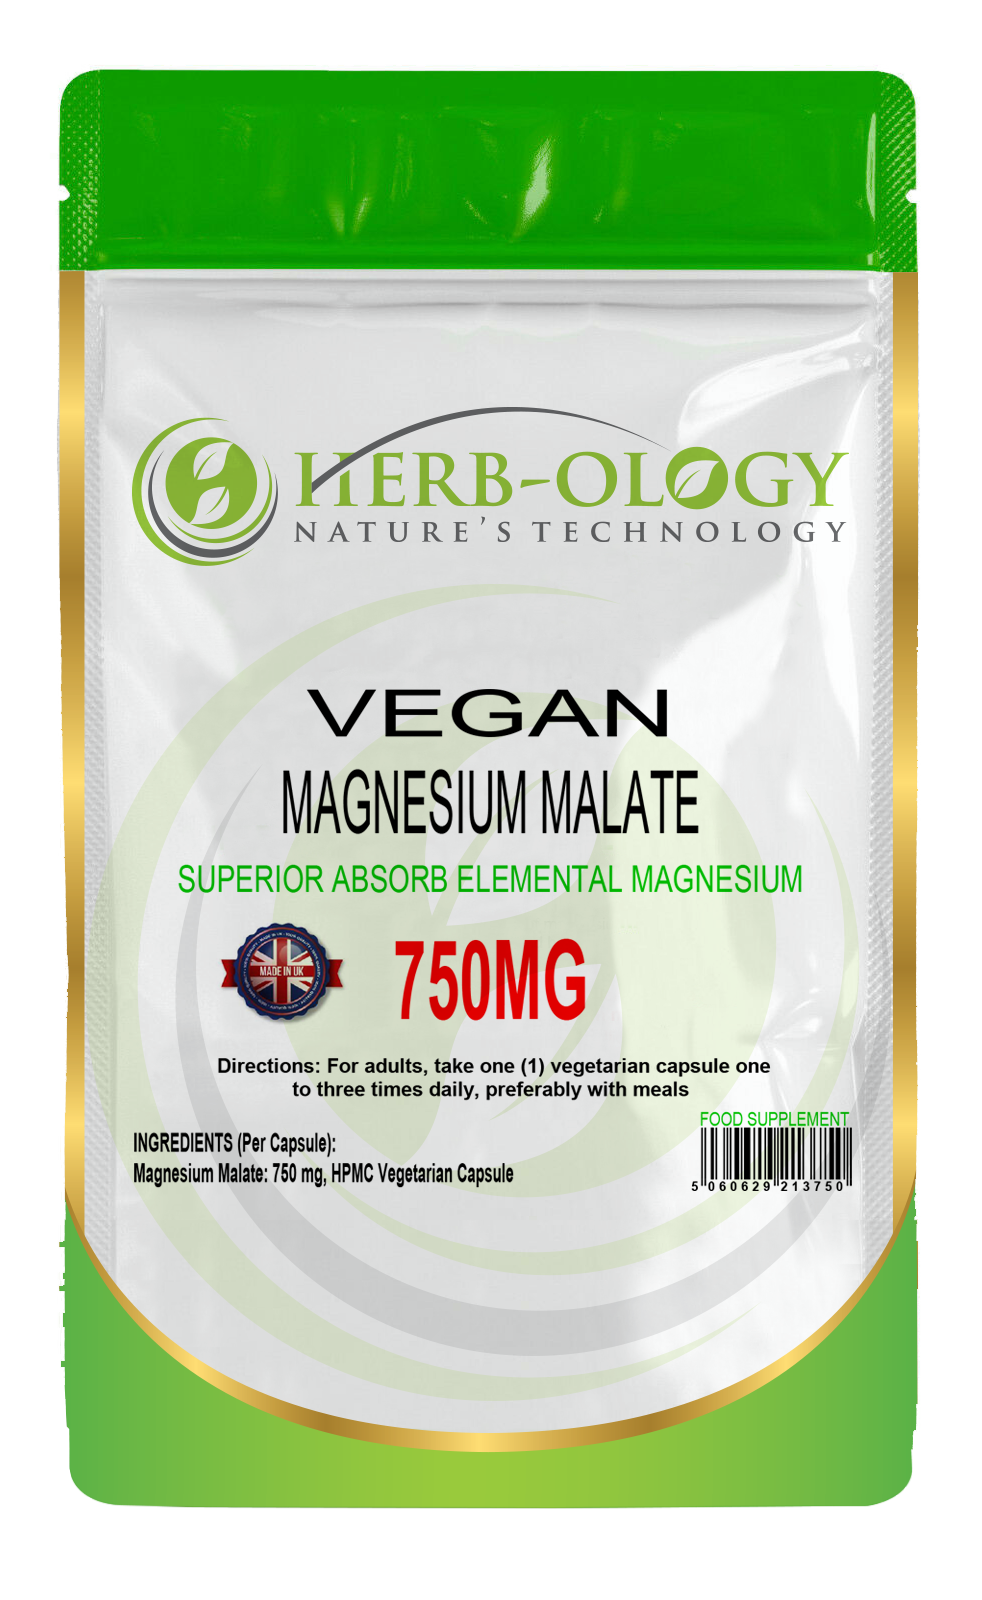 Magnesium Malate 750mg Vegan Capsules For Magnesium Deficiency